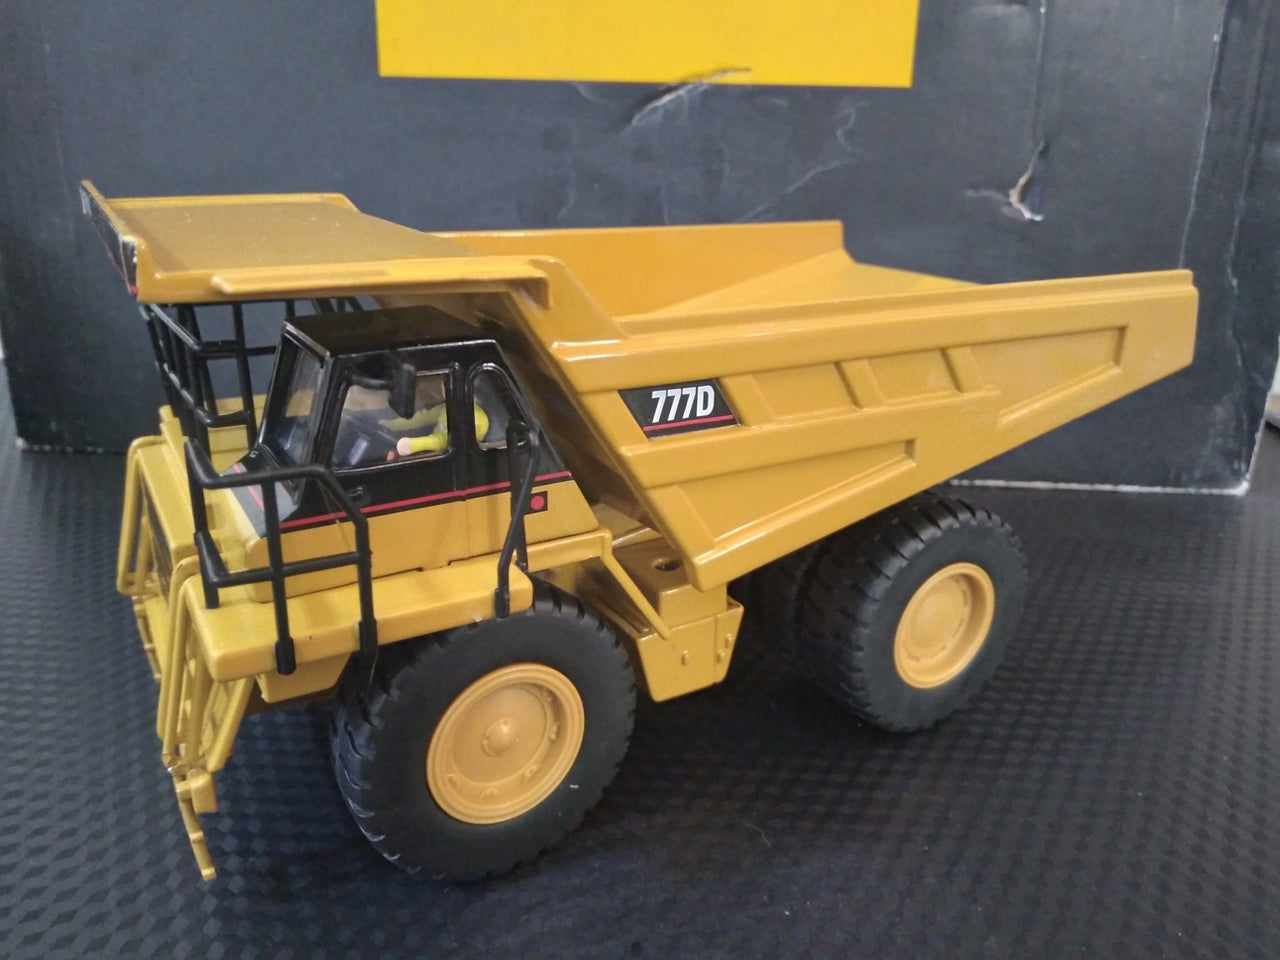 85104C Caterpillar 777D Mining Truck 1:50 Scale